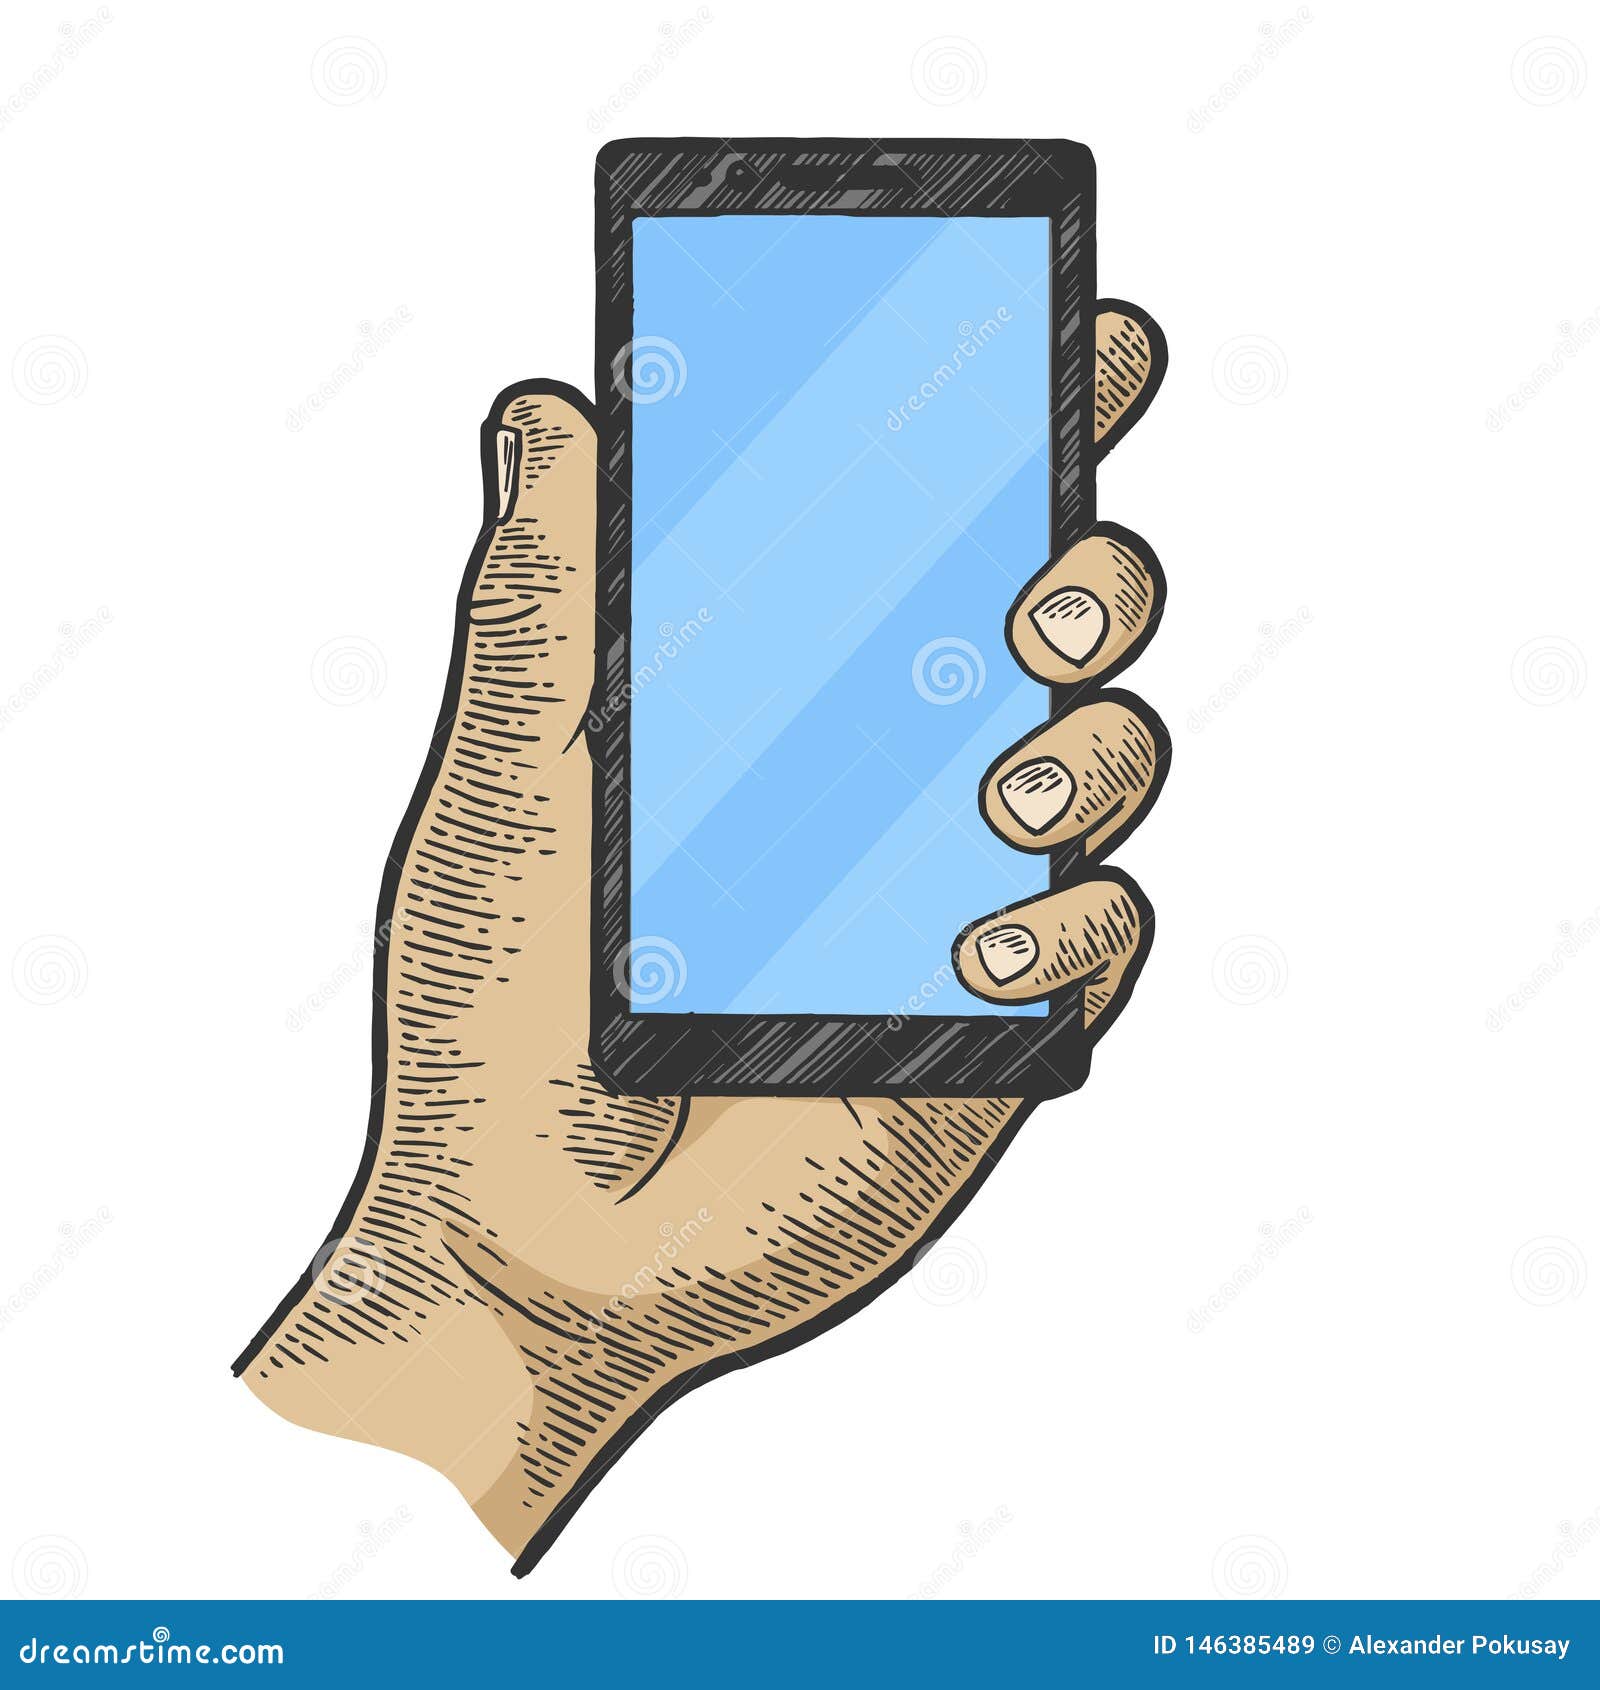 3D Drawing Phone | Phone, Samsung galaxy phone, Galaxy phone